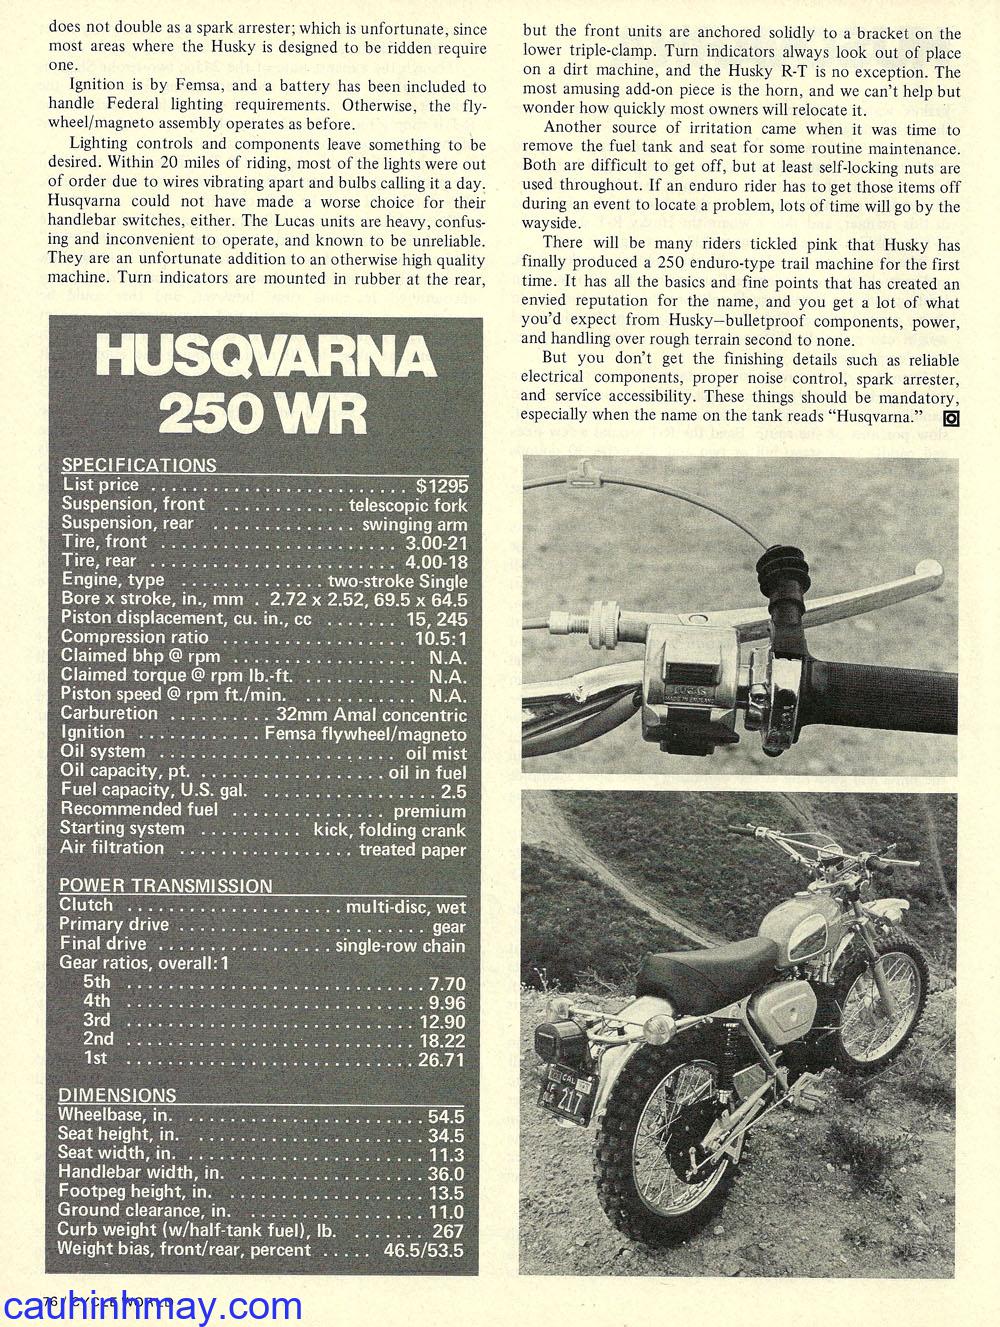 1972 HUSQVARNA WR 250 - cauhinhmay.com